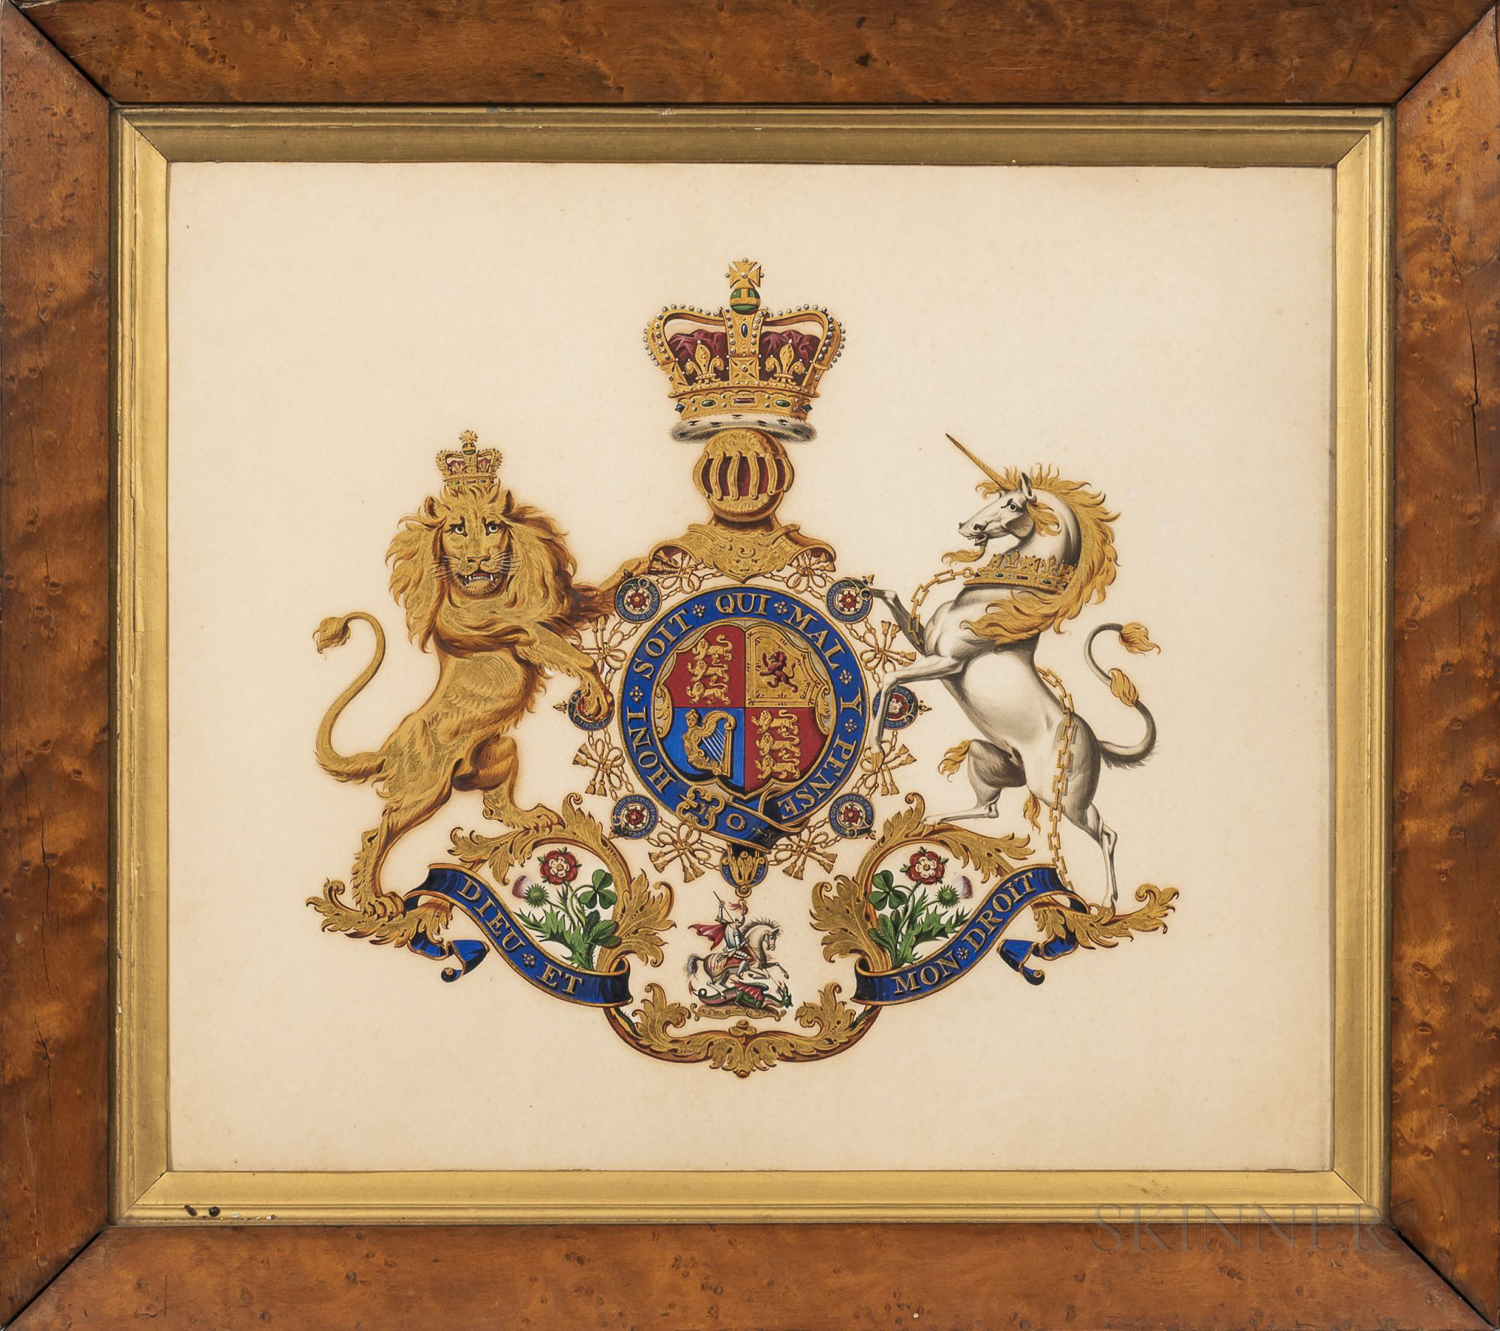 British School, 19th Century, British Royal Coat of Arms, Inscribed "...inted by Ramsay McInnes/Dece